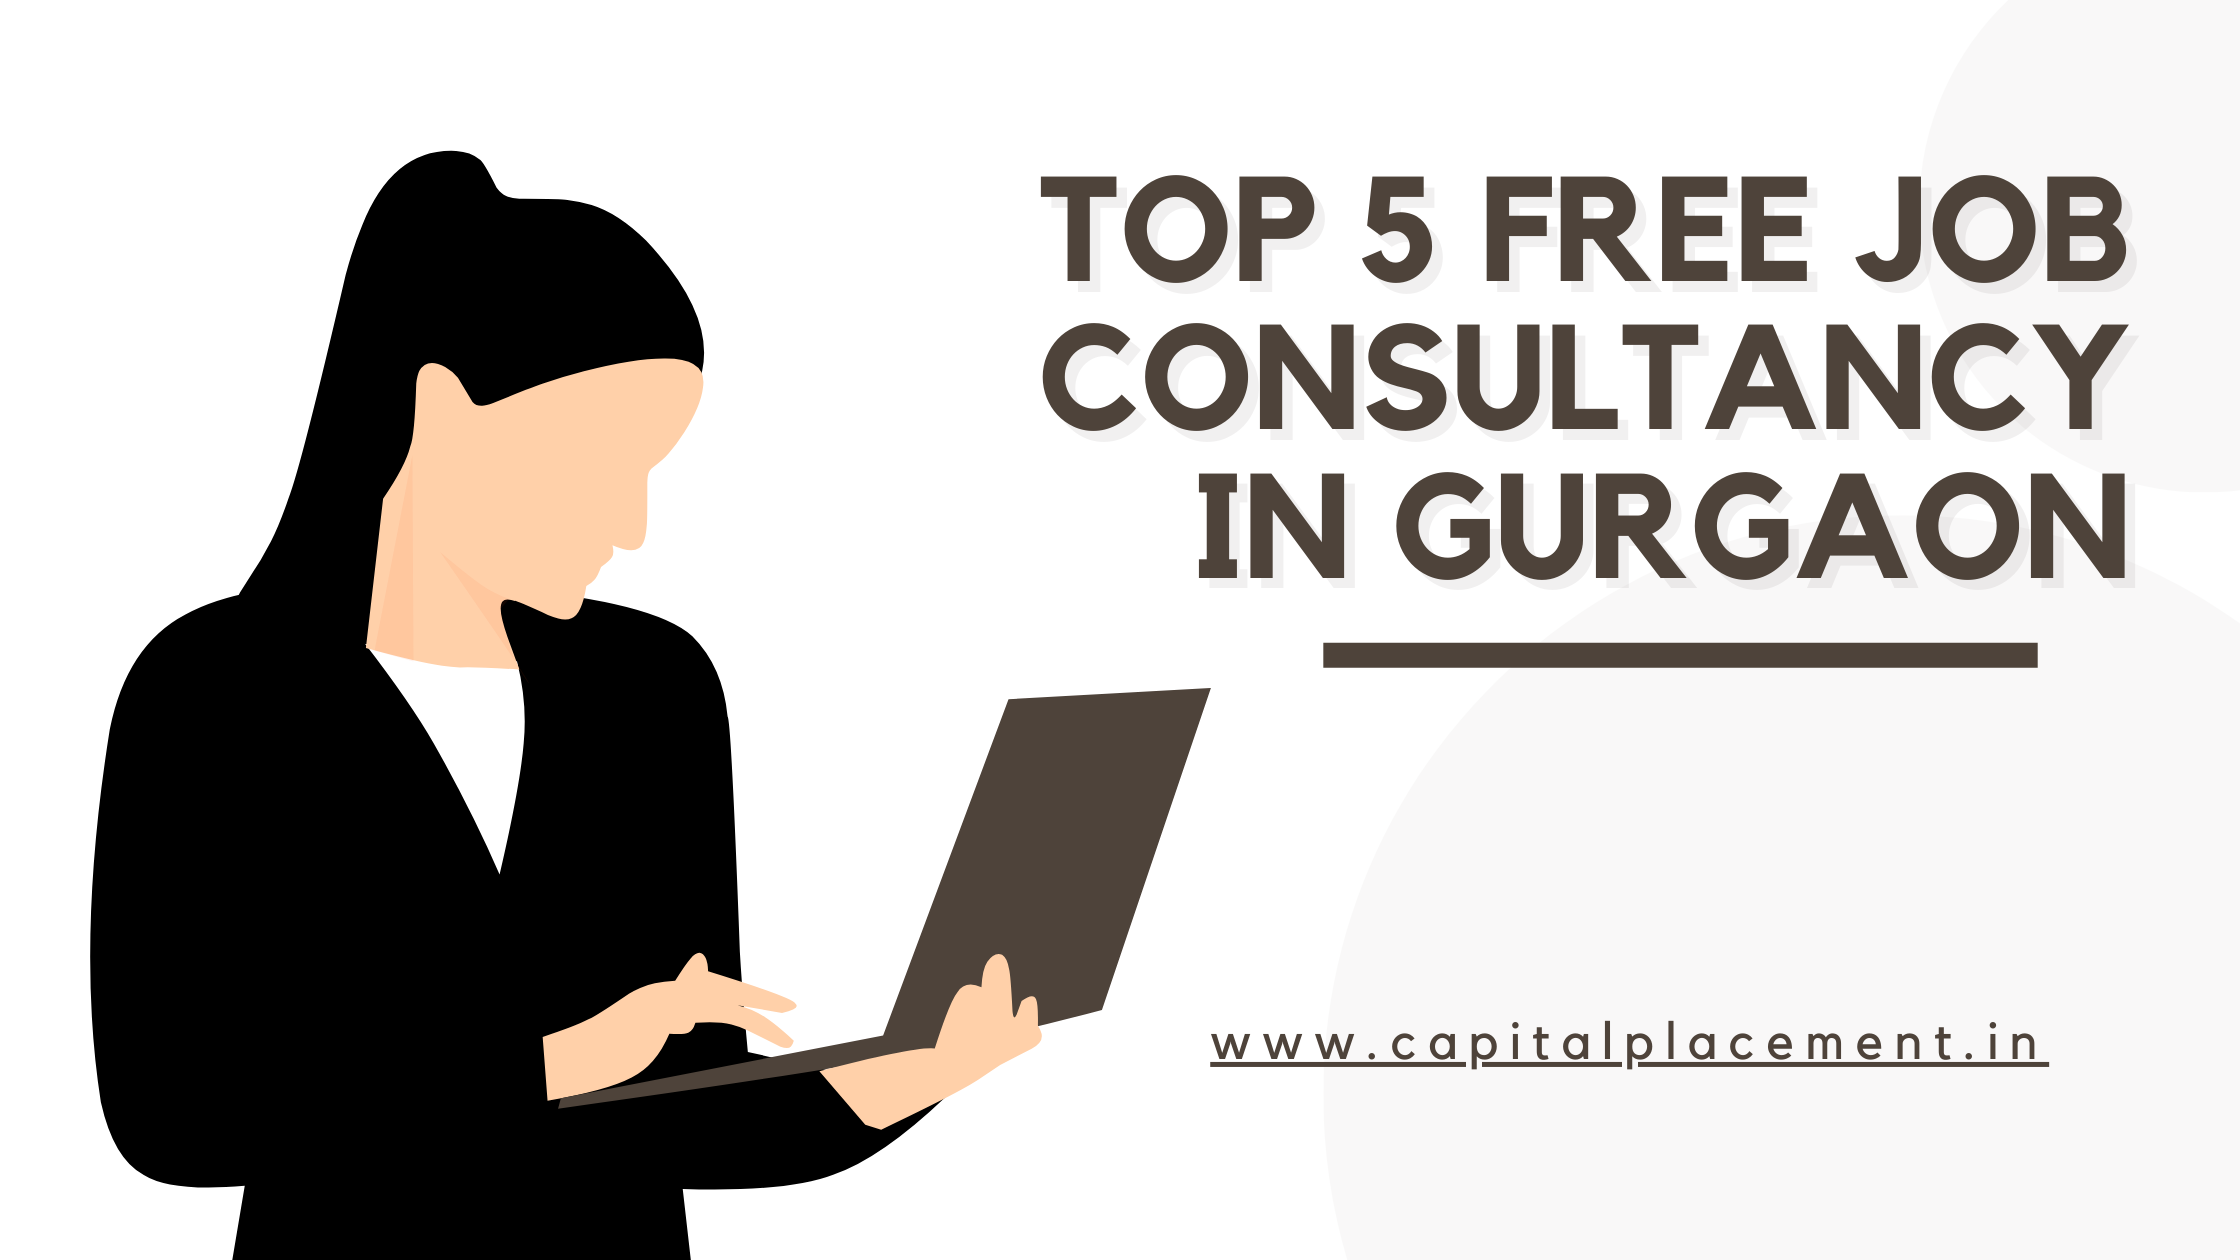 Top 5 Free Job Consultancy In Gurgaon